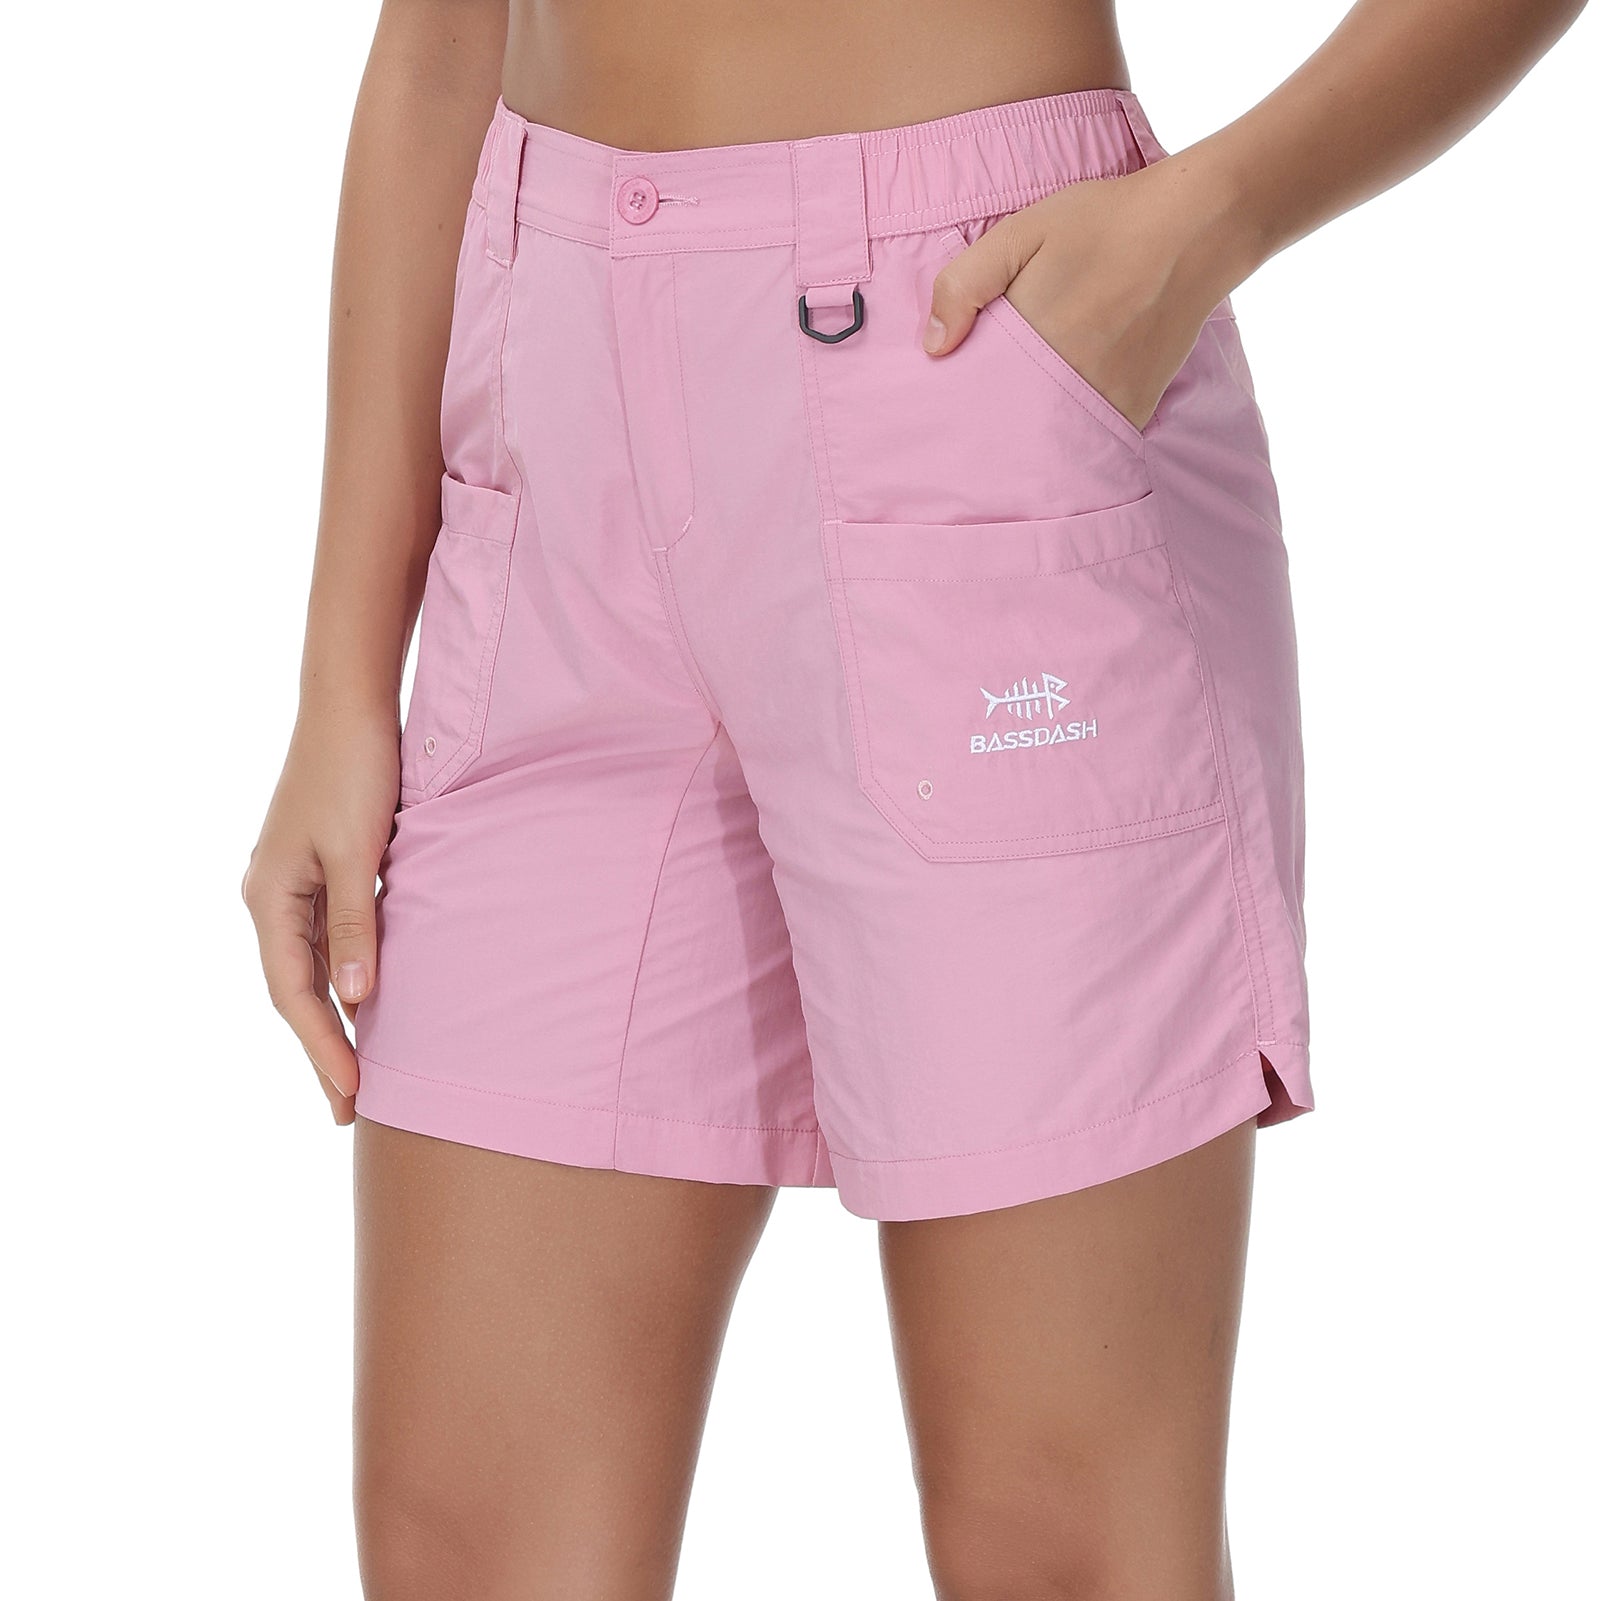 Bassdash Women's UPF 50+ Quick Dry Fishing Shorts FP03W, Pink / X-Small